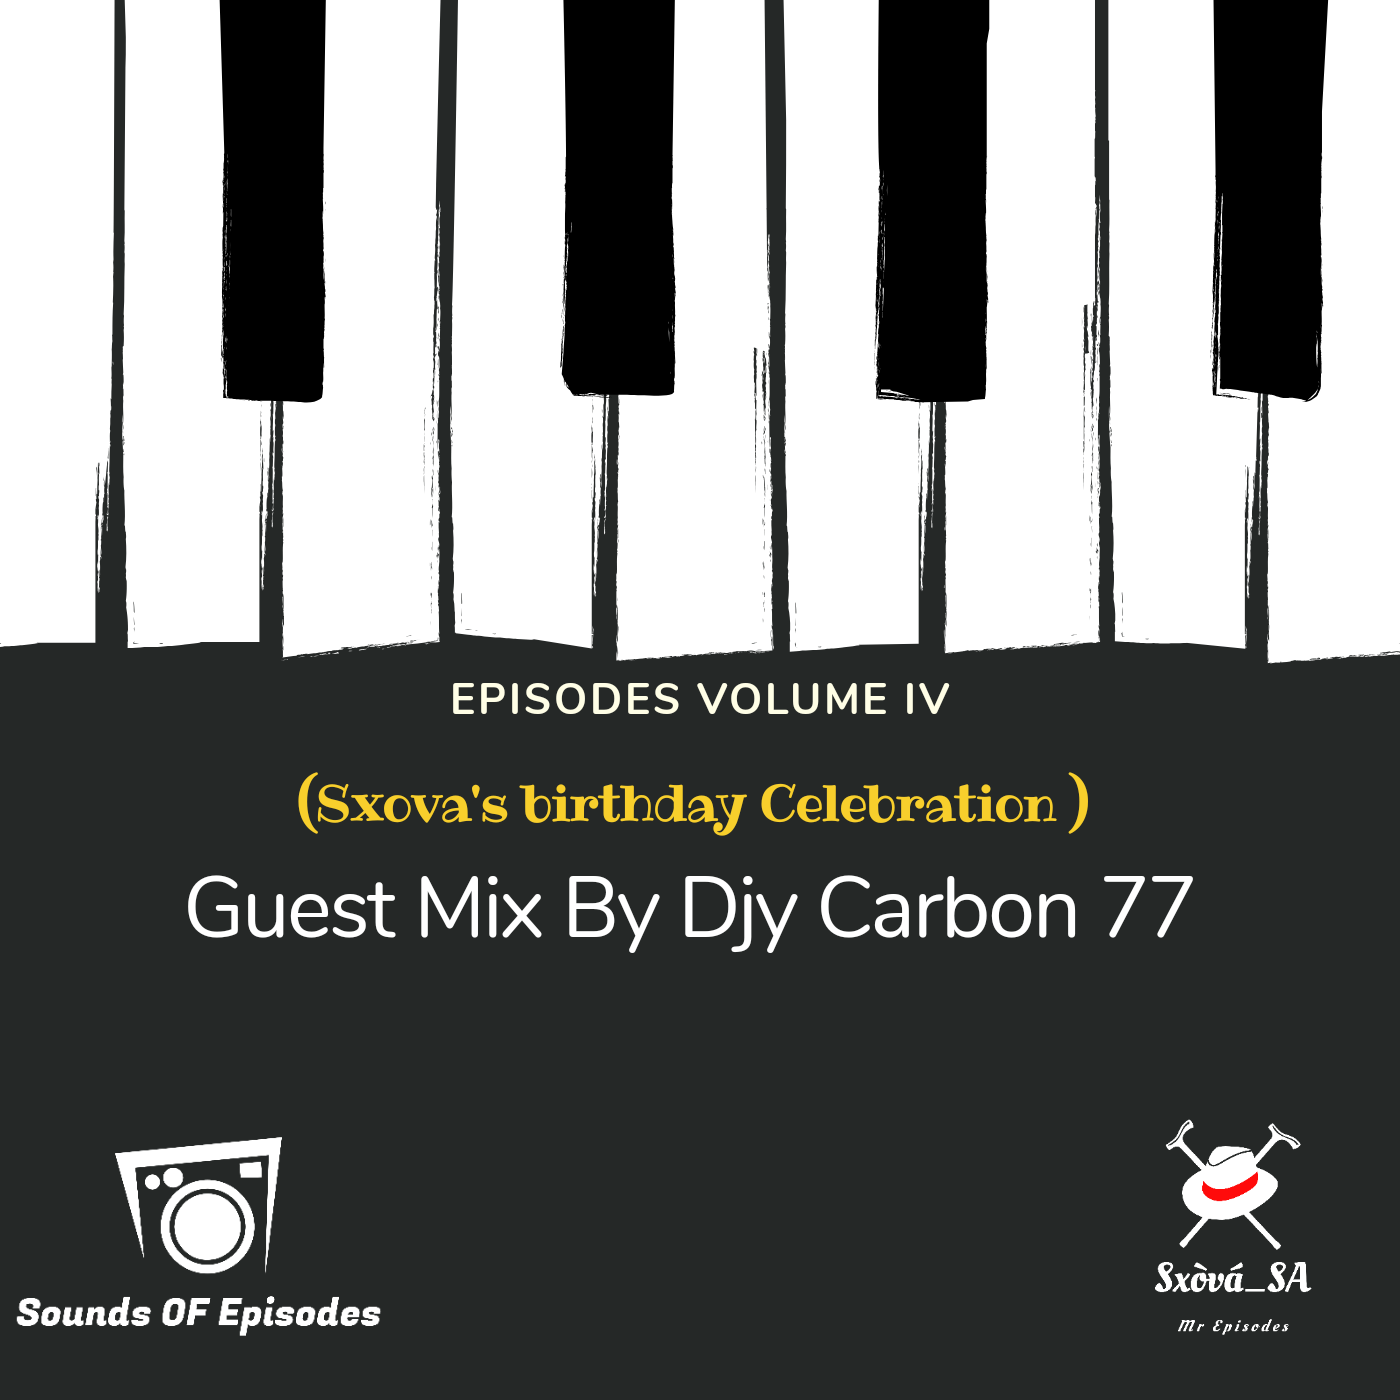 Djy Carbon 77 Sounds Of Episodes #004